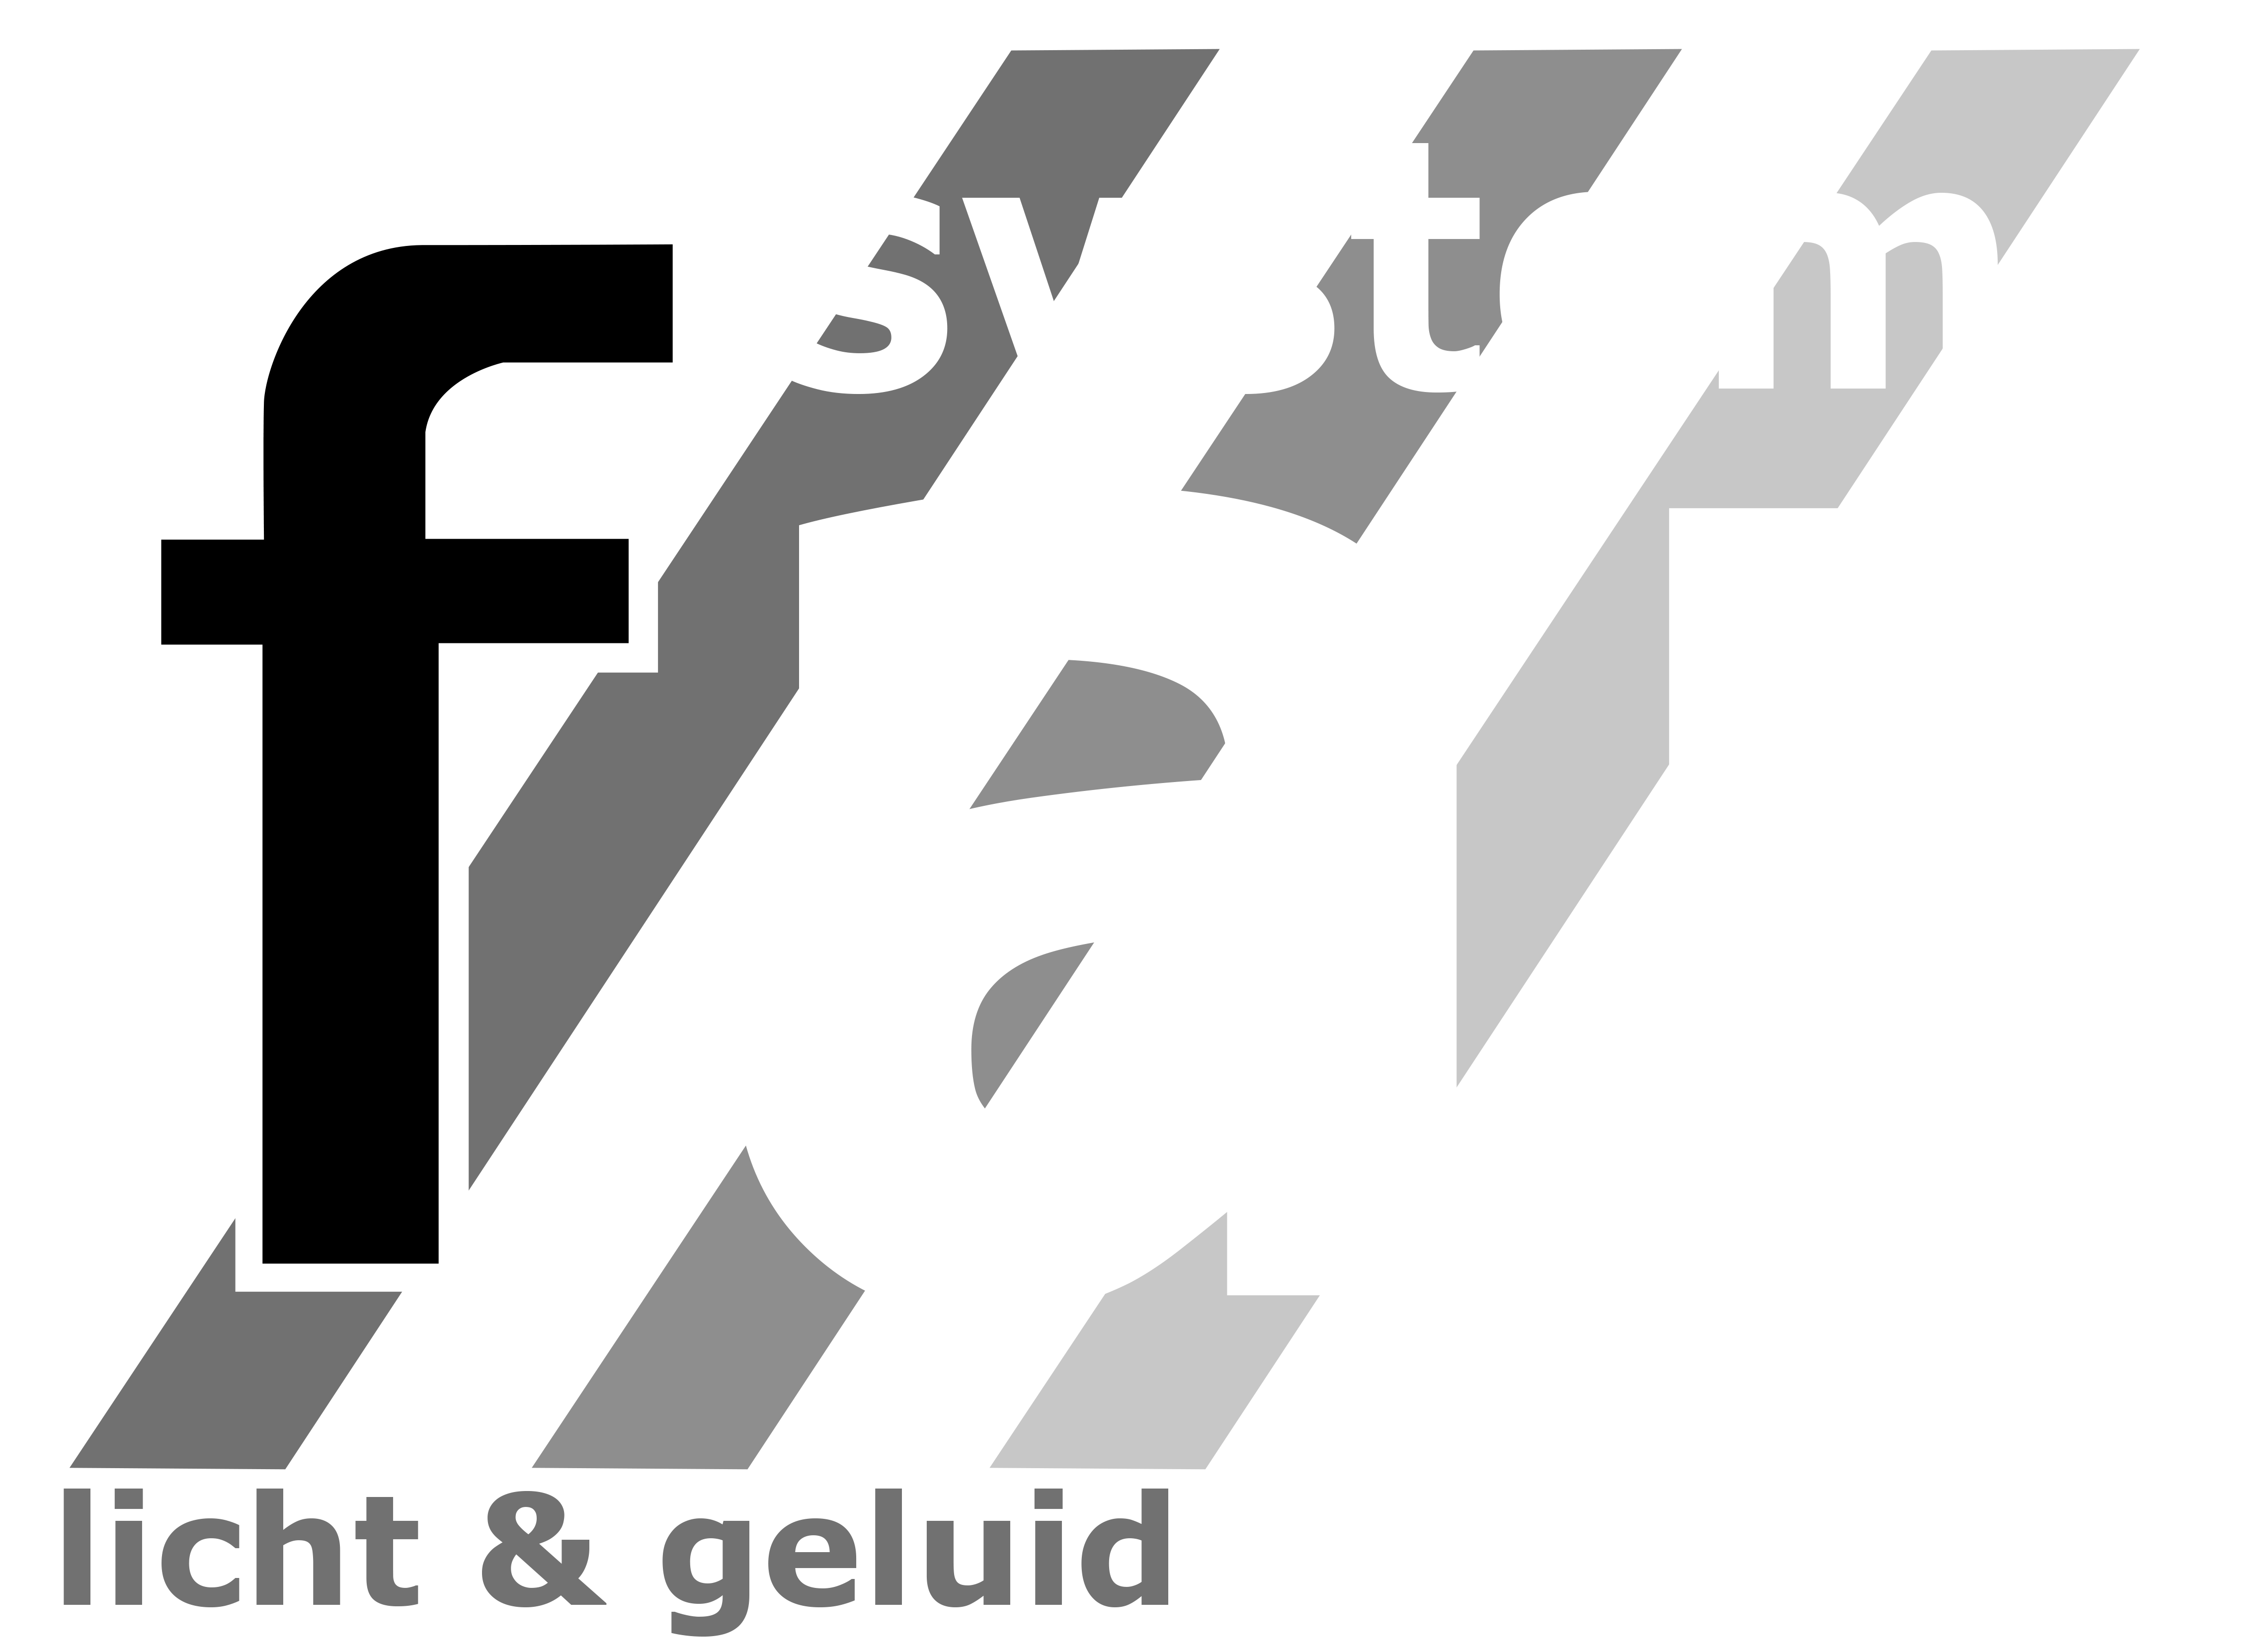 Far Systems